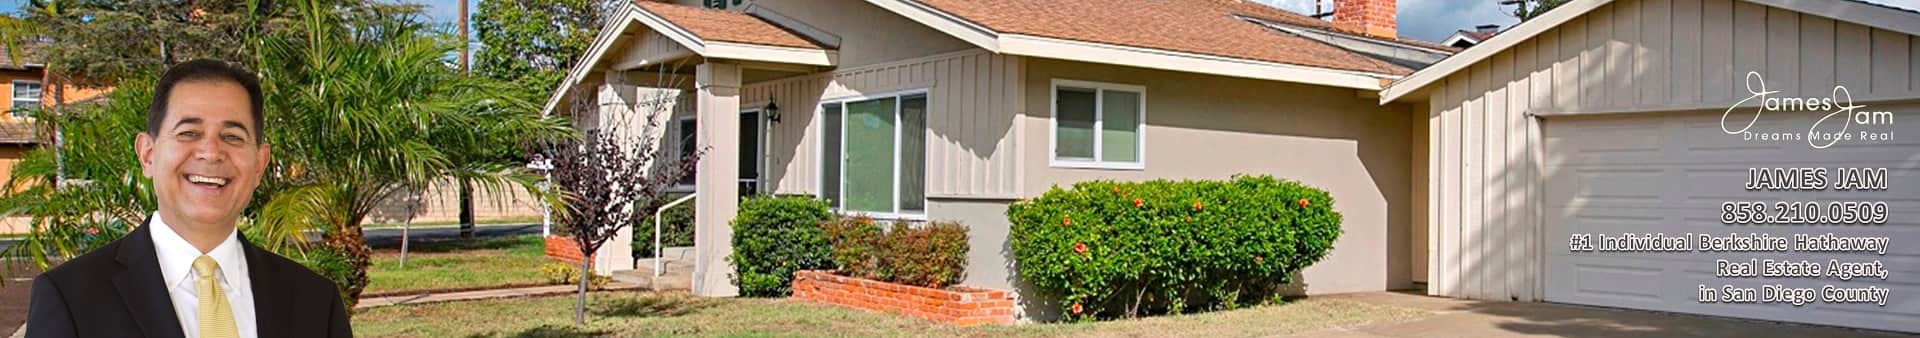 4010 Baldwin Ln, Carlsbad CA Beach Listing 92008 Real Estate For Sale